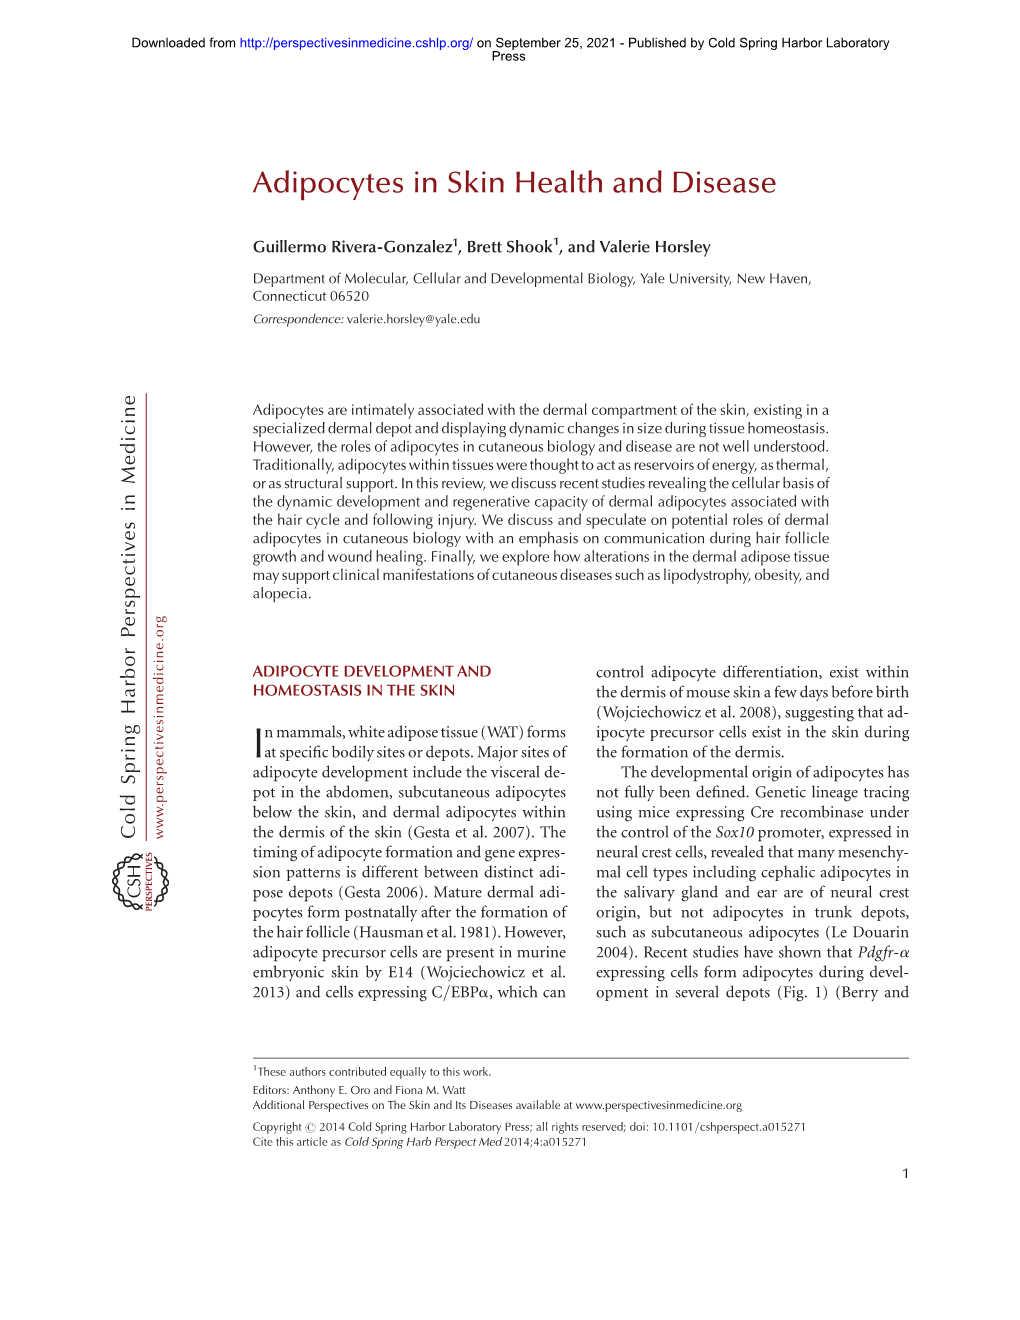 Adipocytes in Skin Health and Disease